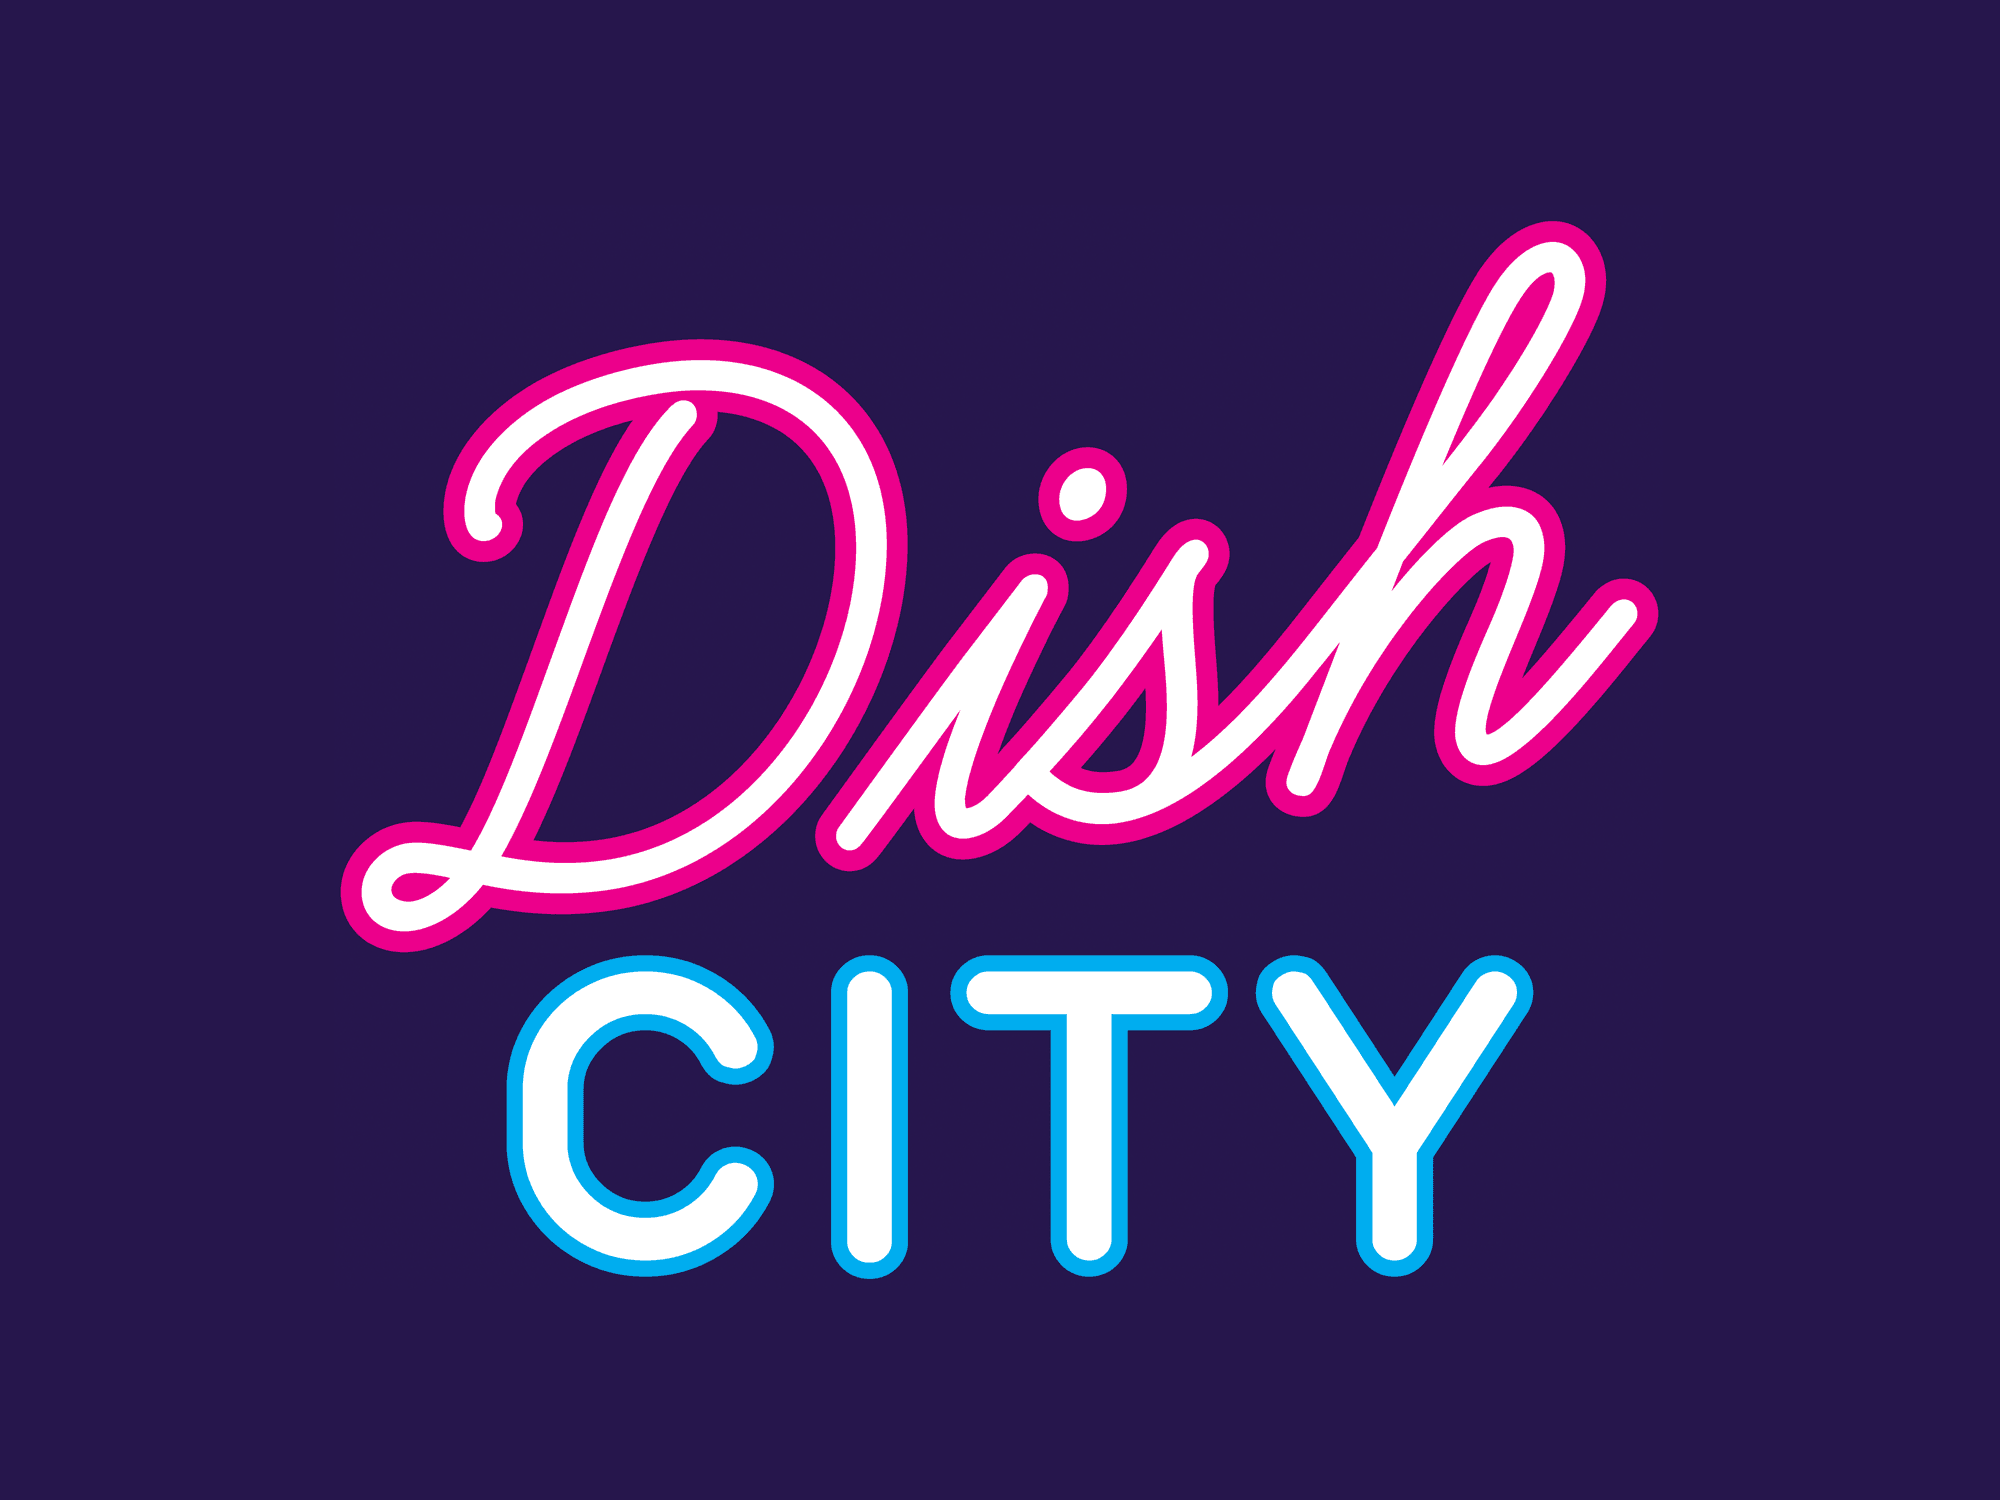 Thumbnail for "Introducing Dish City".